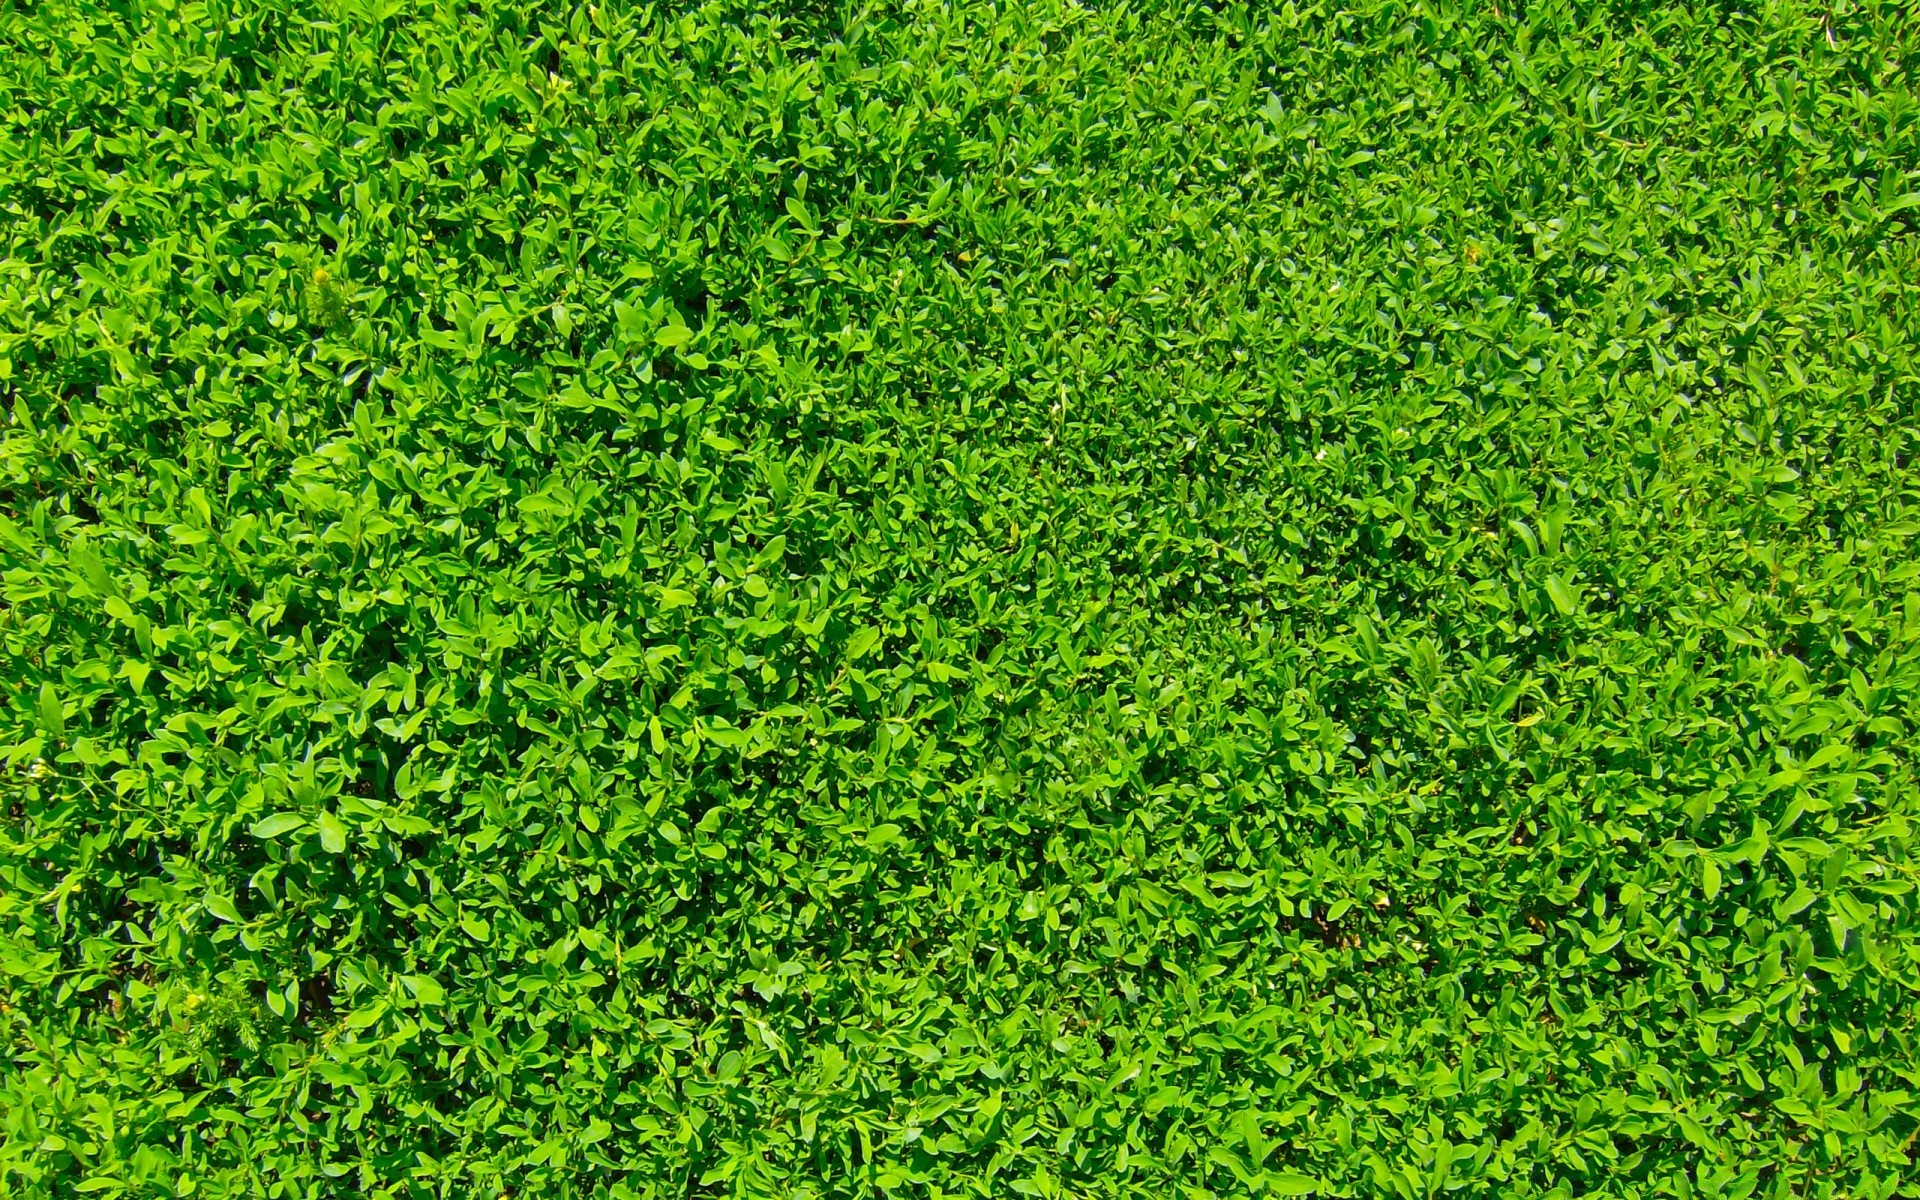 plants grass growth leaf lawn flora lush nature turf yard desktop summer environment garden ground pattern freshness ecology soil bright